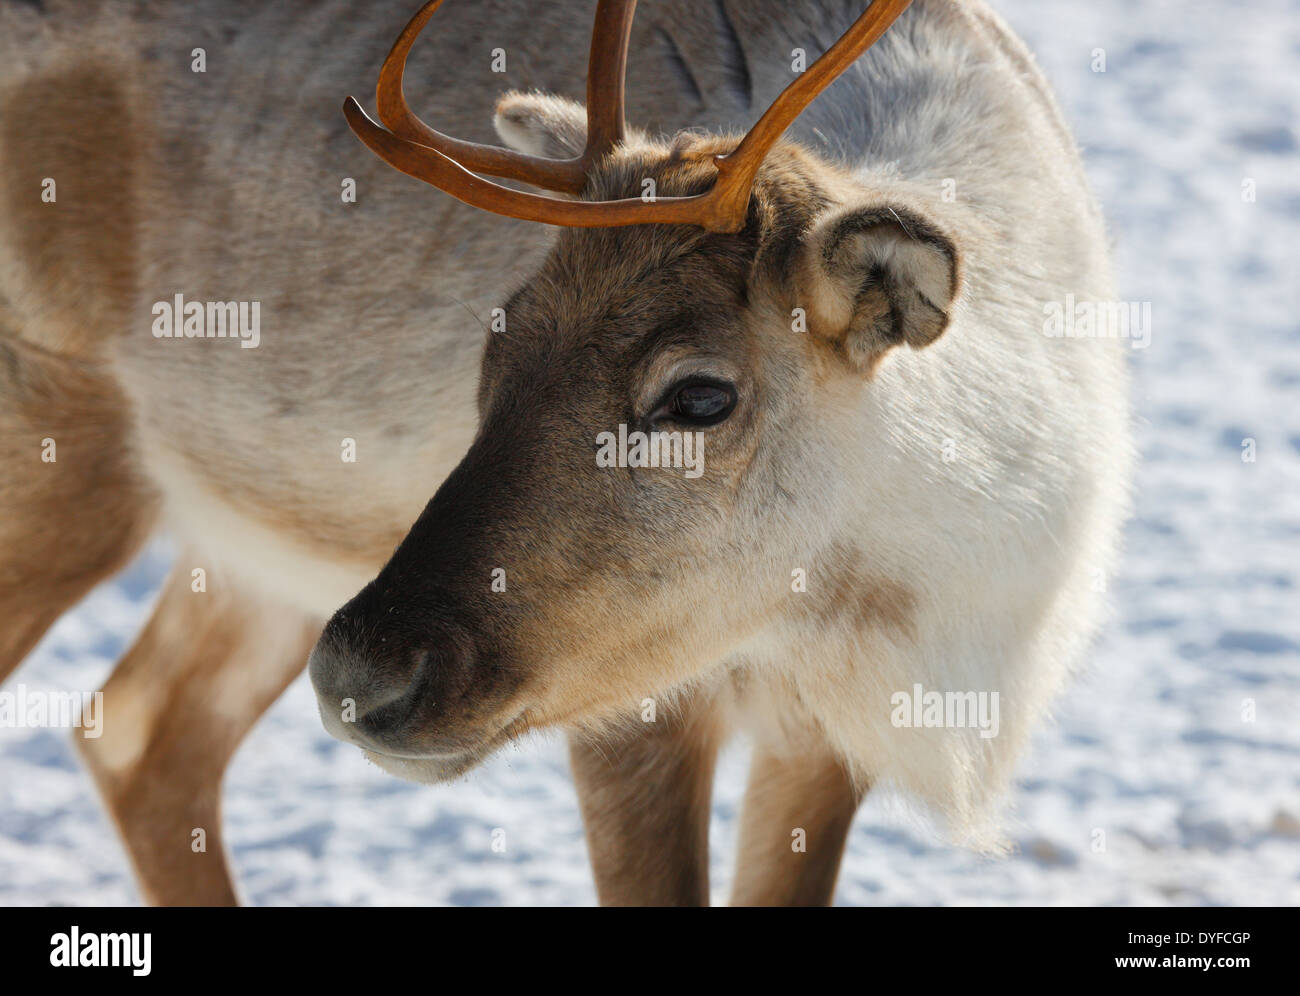 Reindeer close up - Lapland Finland Stock Photo